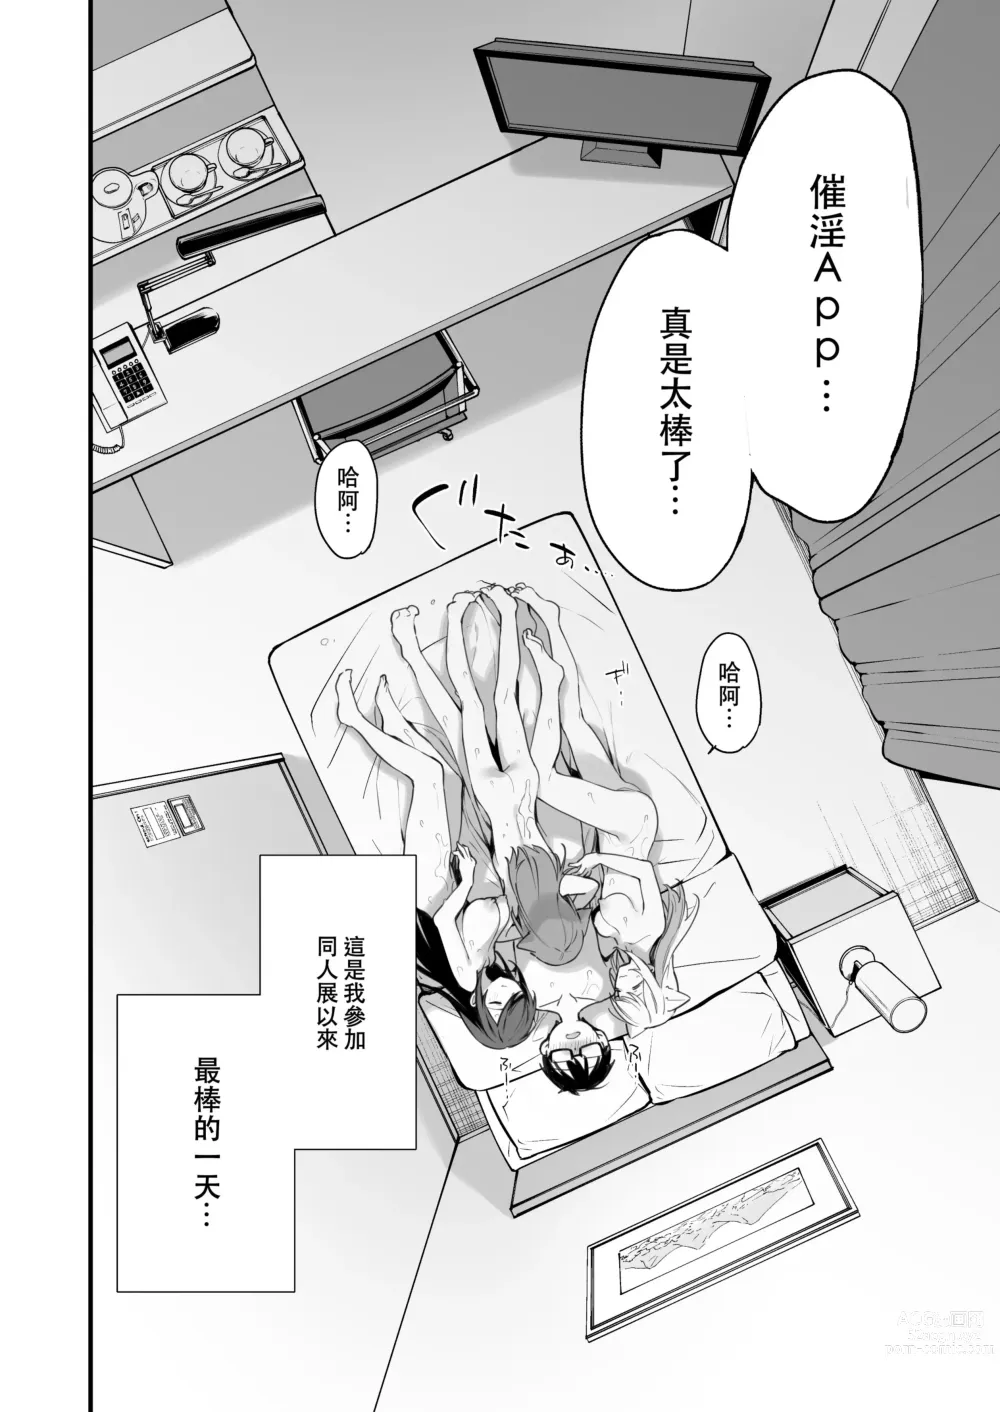 Page 56 of doujinshi 催淫コミケ